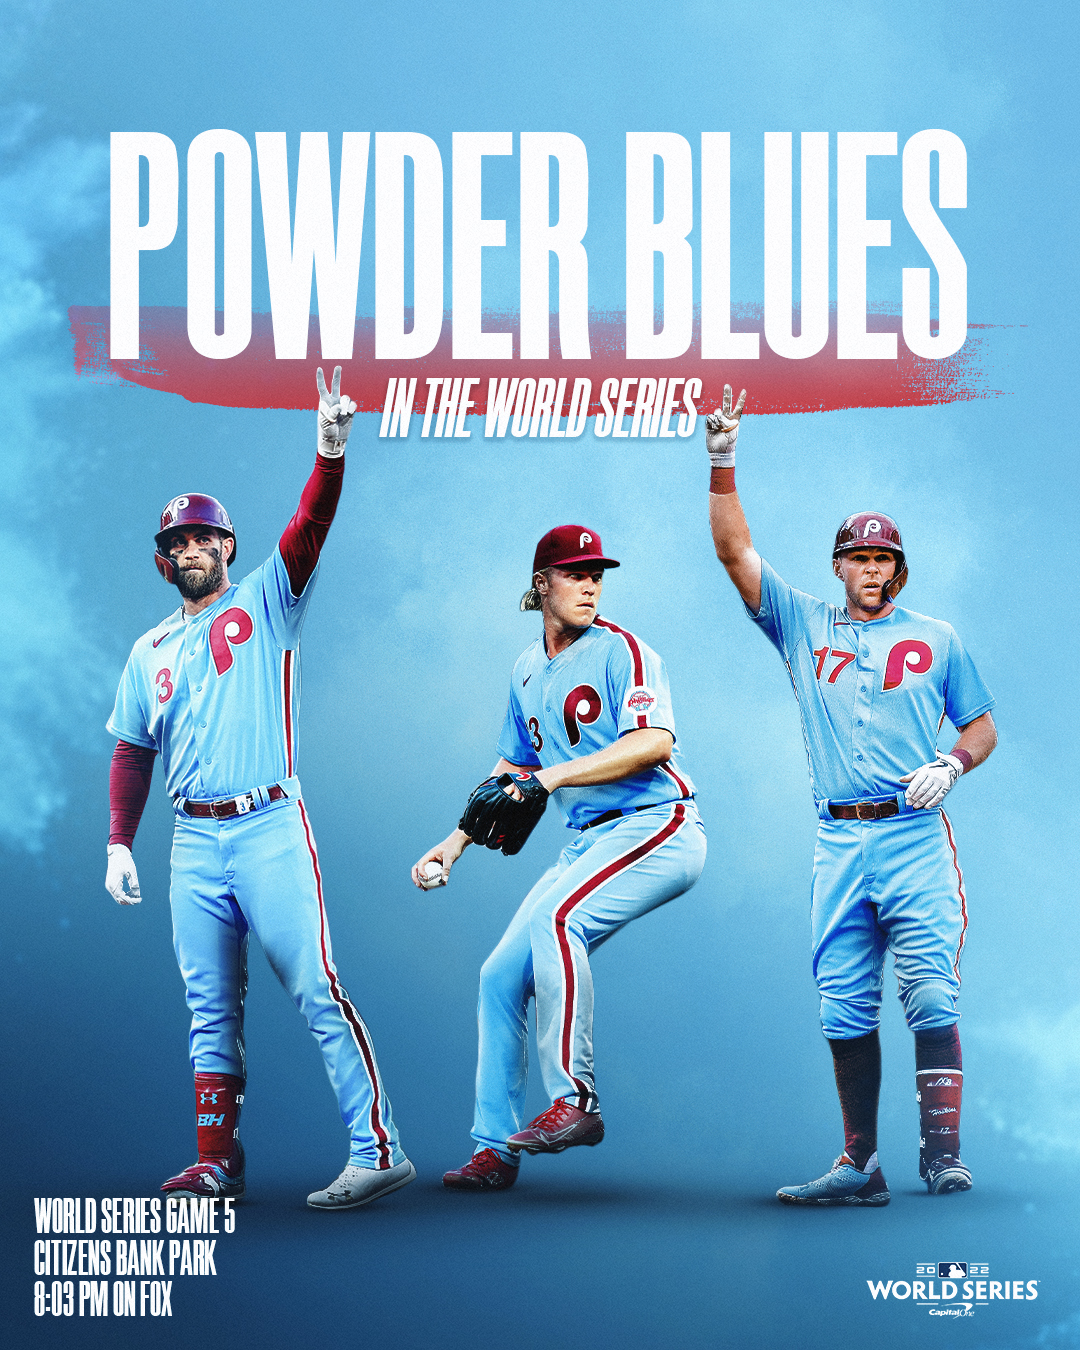 phillies powder blue uniforms